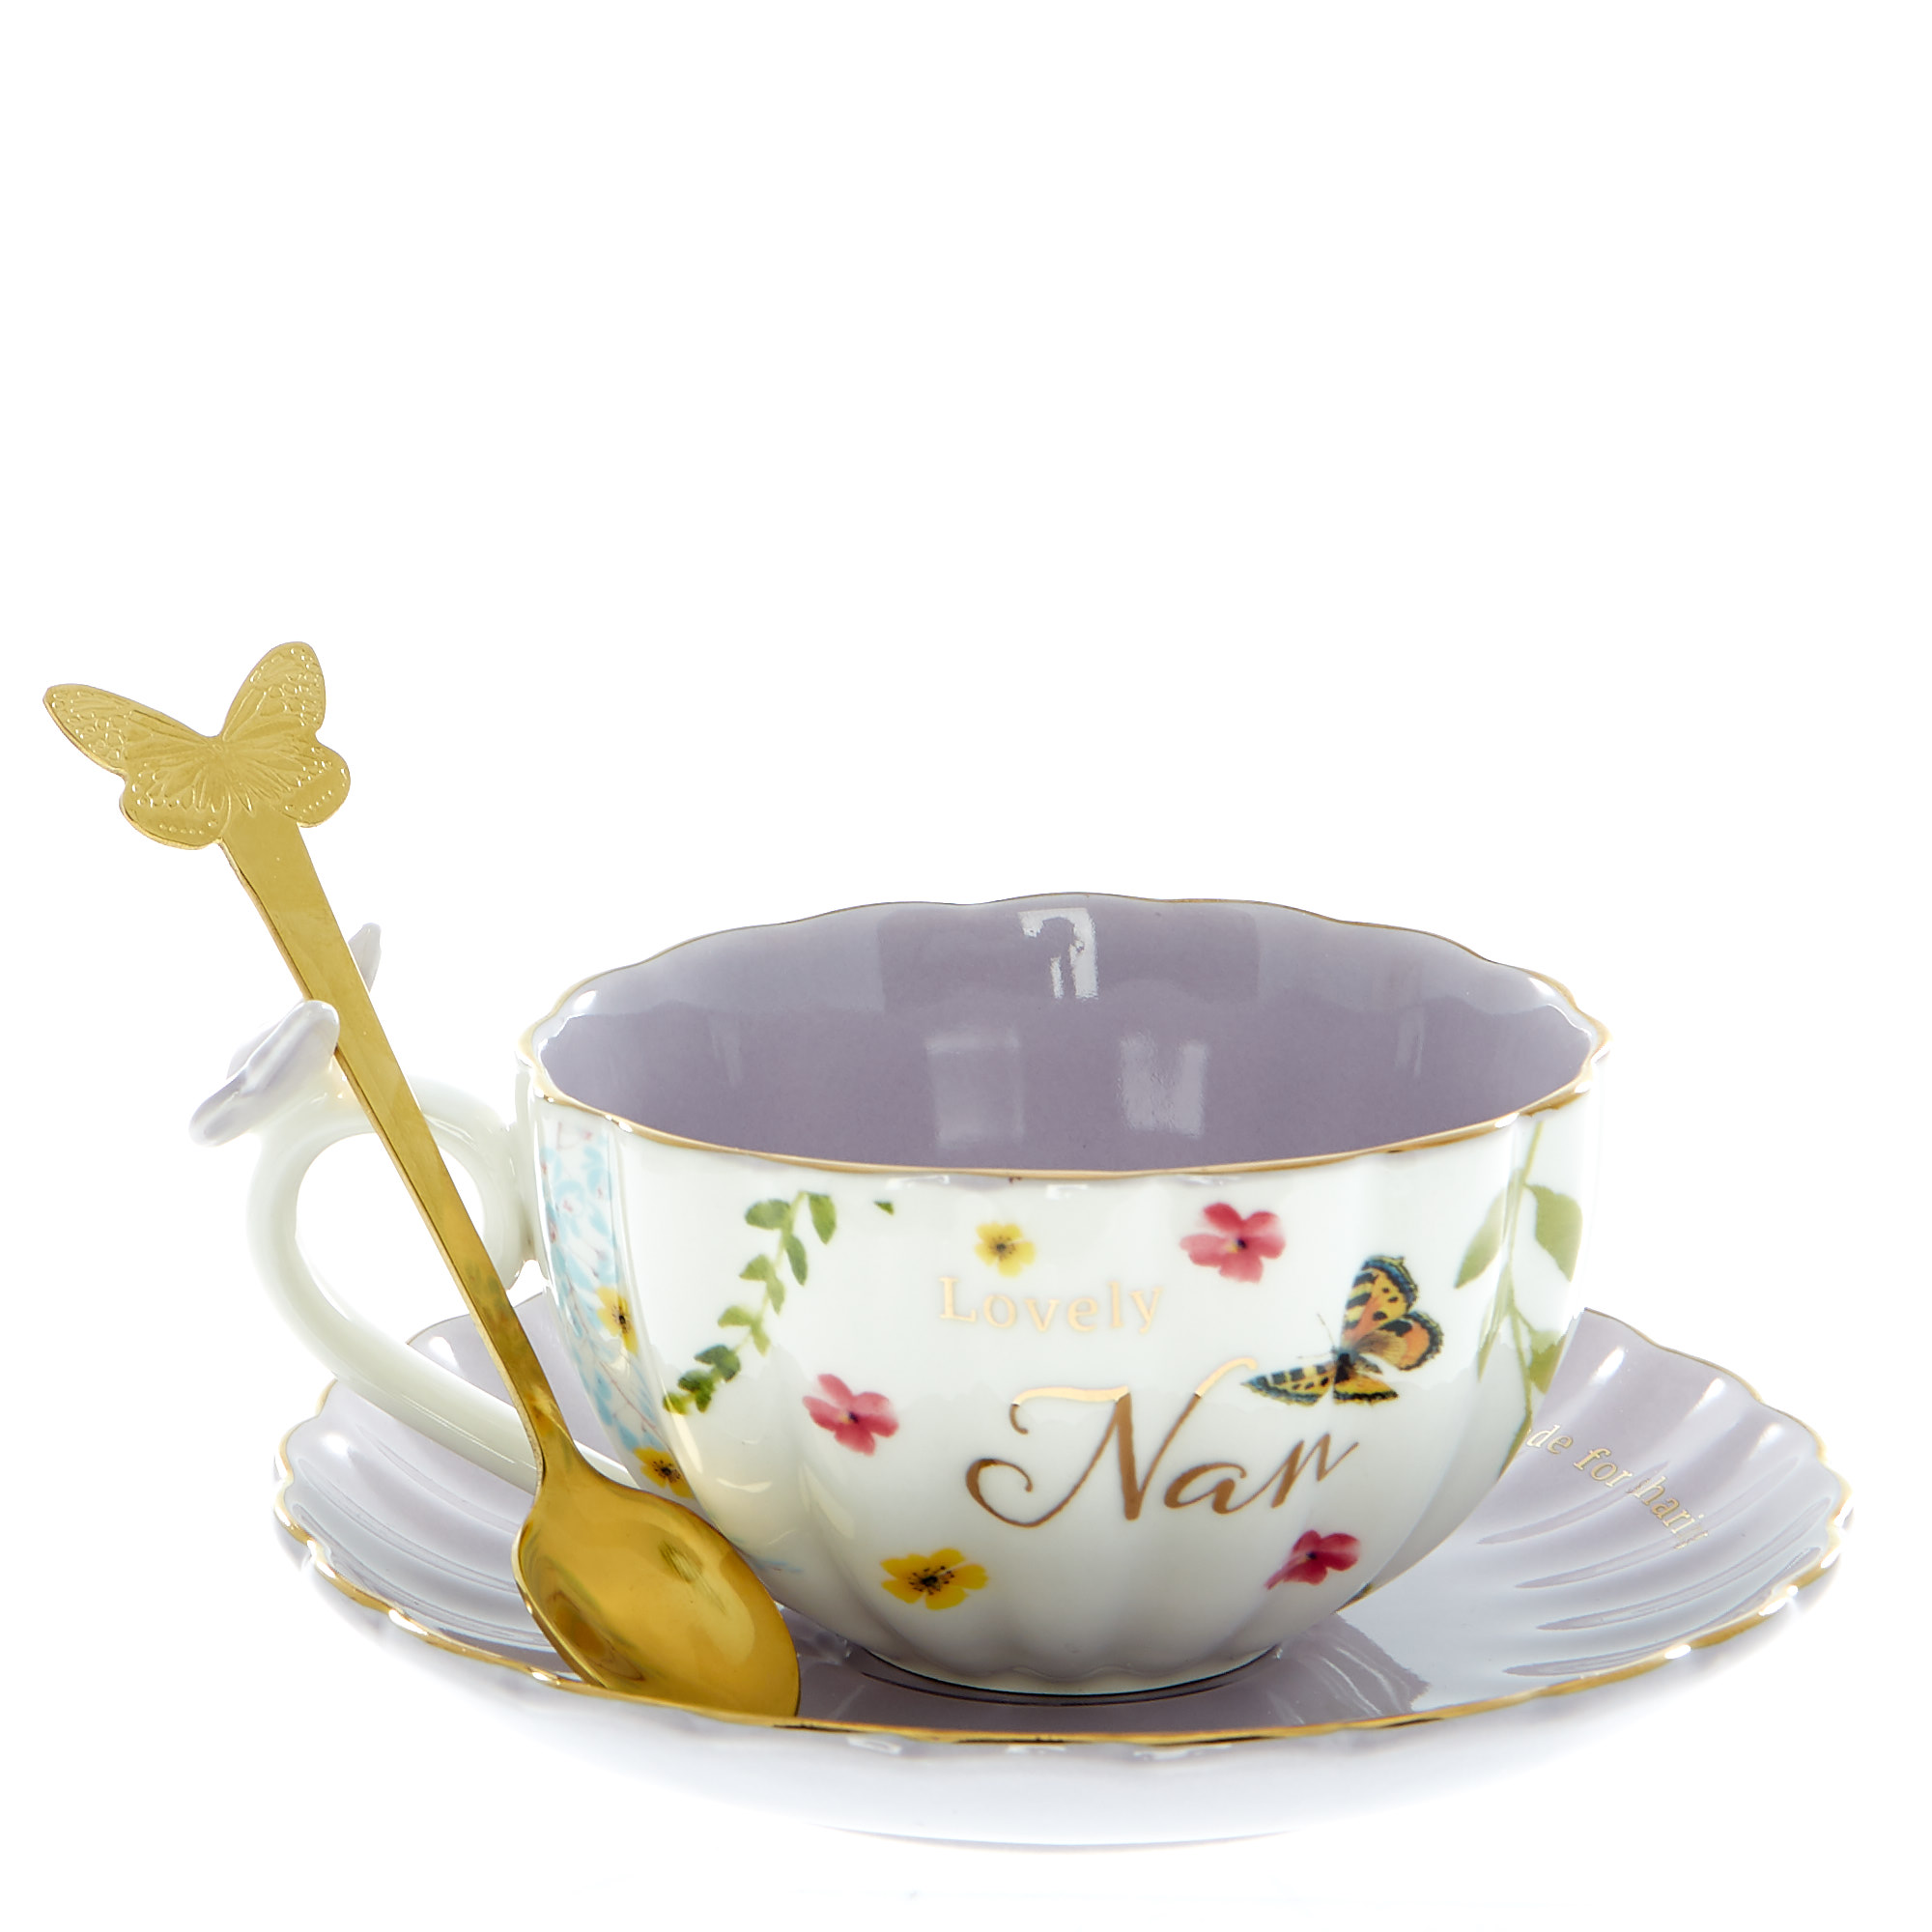 Lovely Nan Teacup, Saucer & Spoon Set